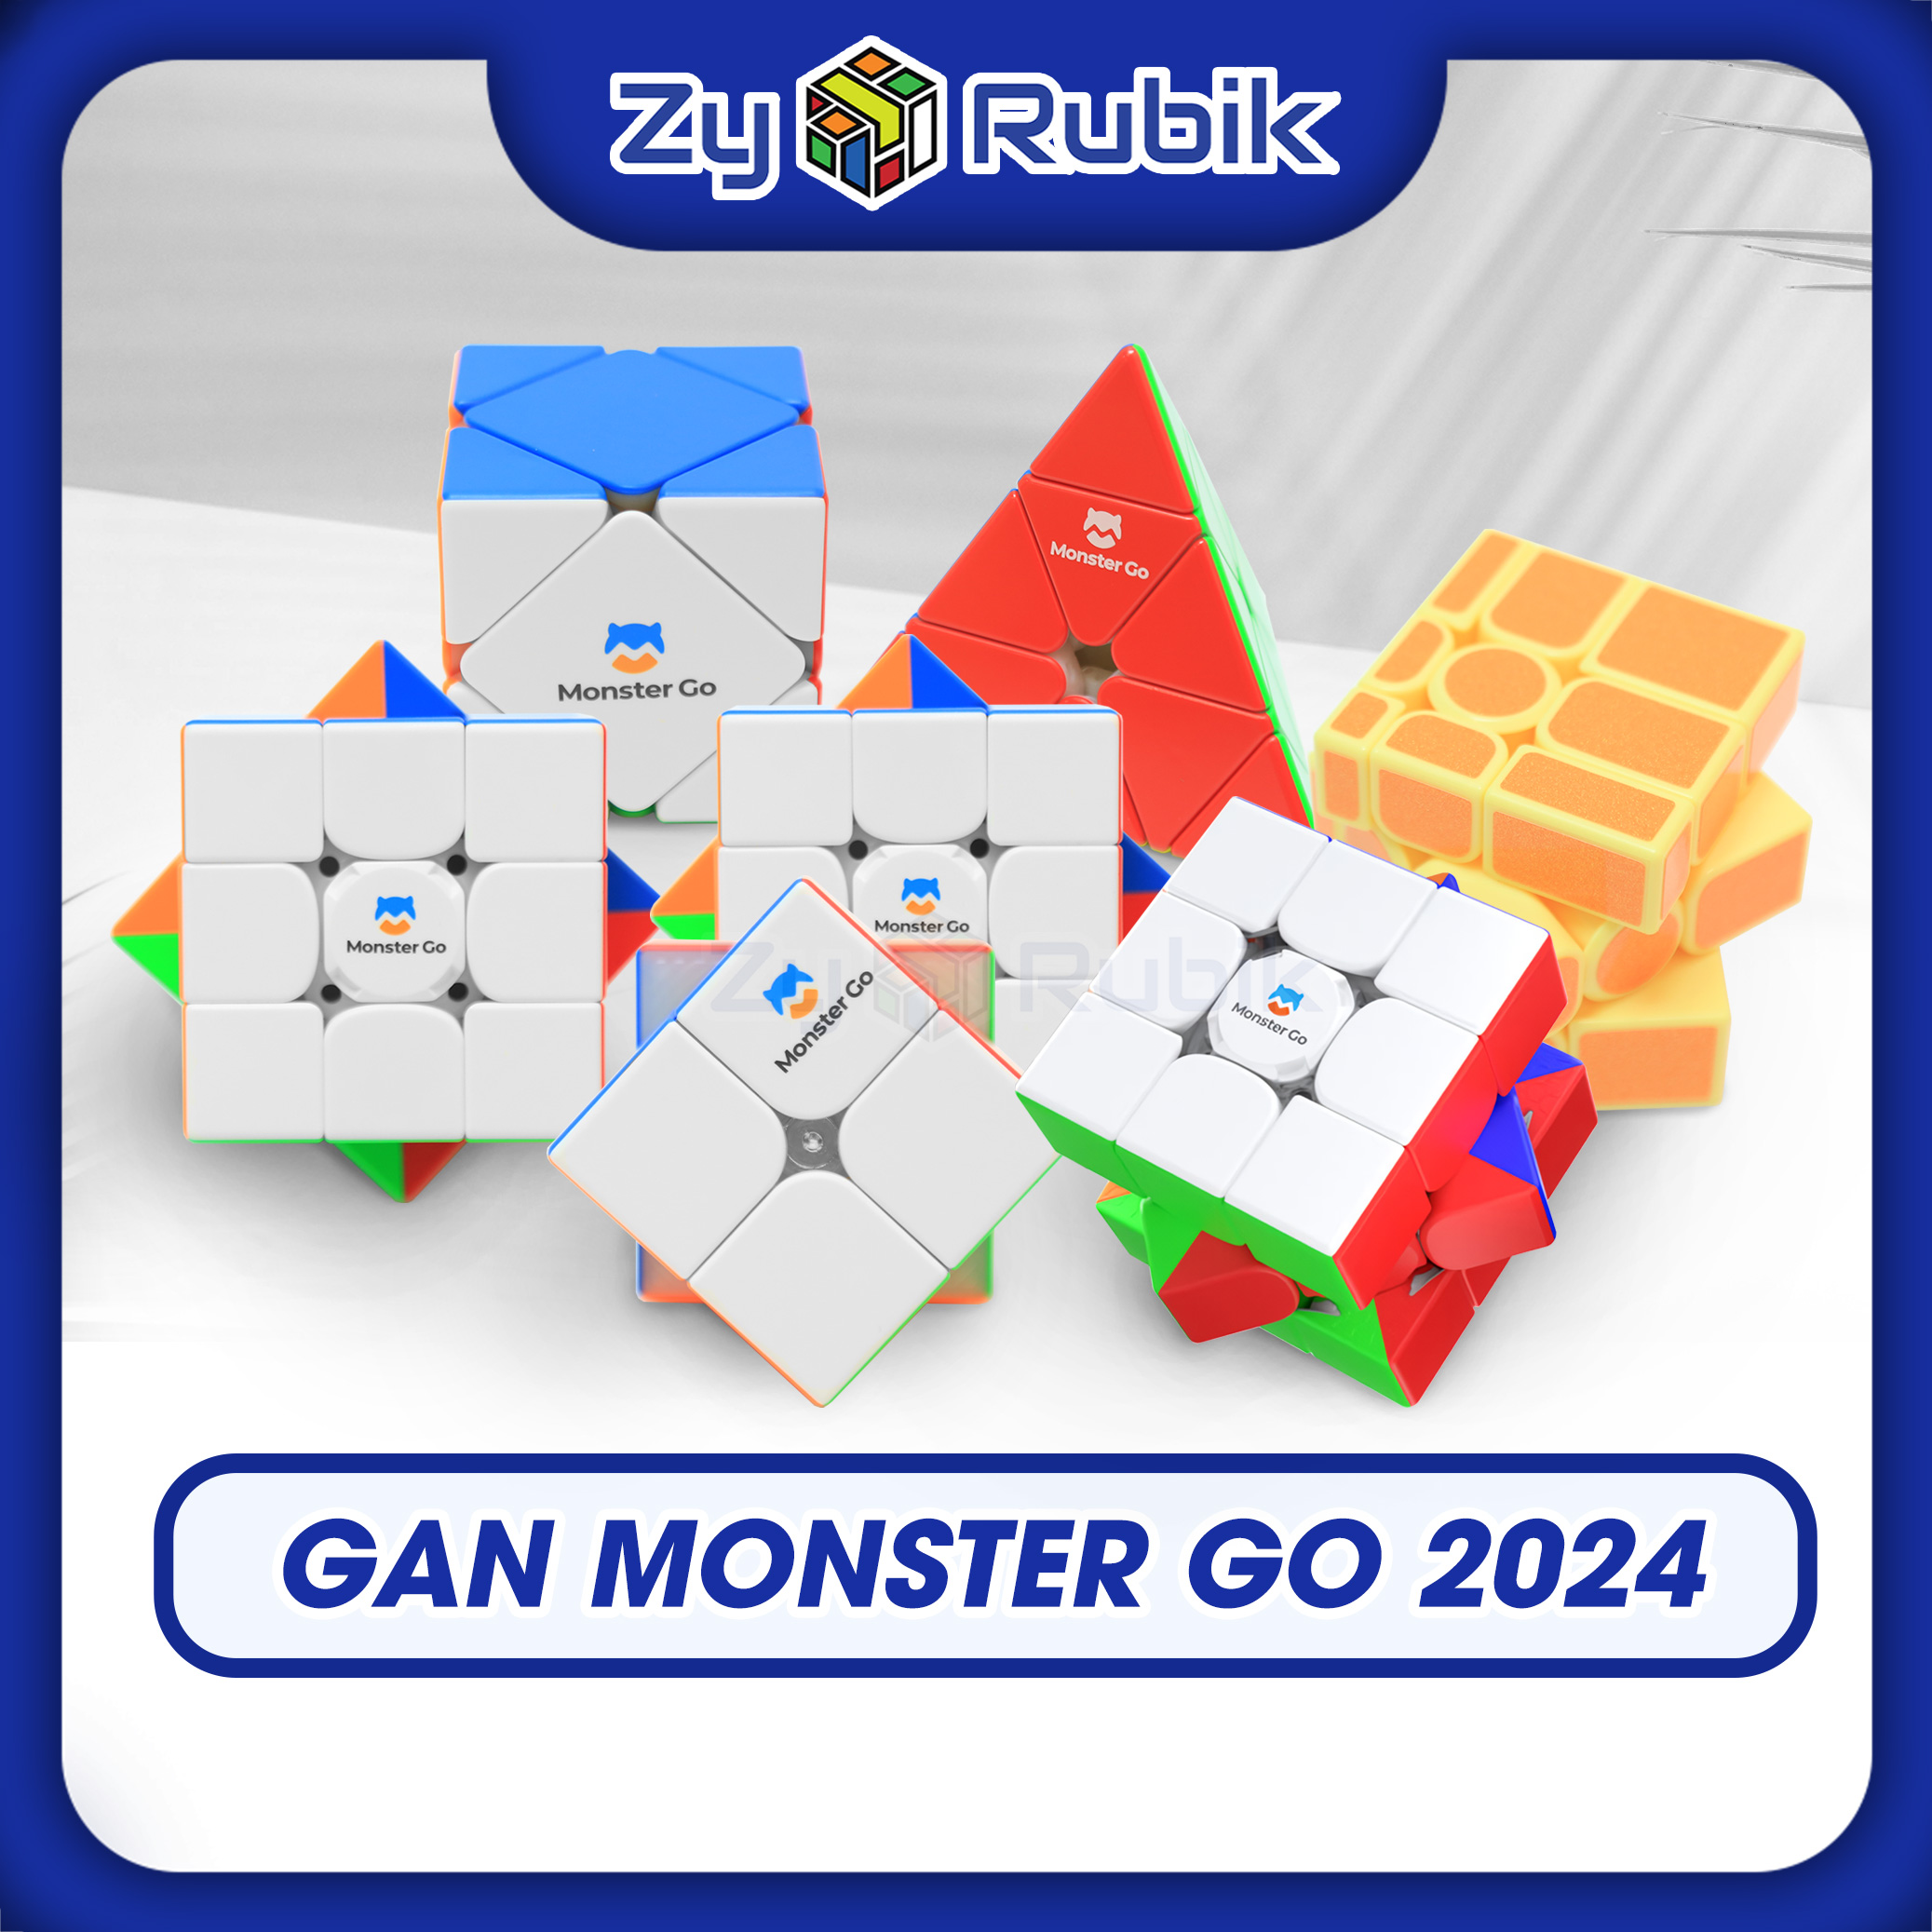 Gan monster go 2024-gan monster go 2x2 3x3x3 m 3x3 AI deciminix skegan